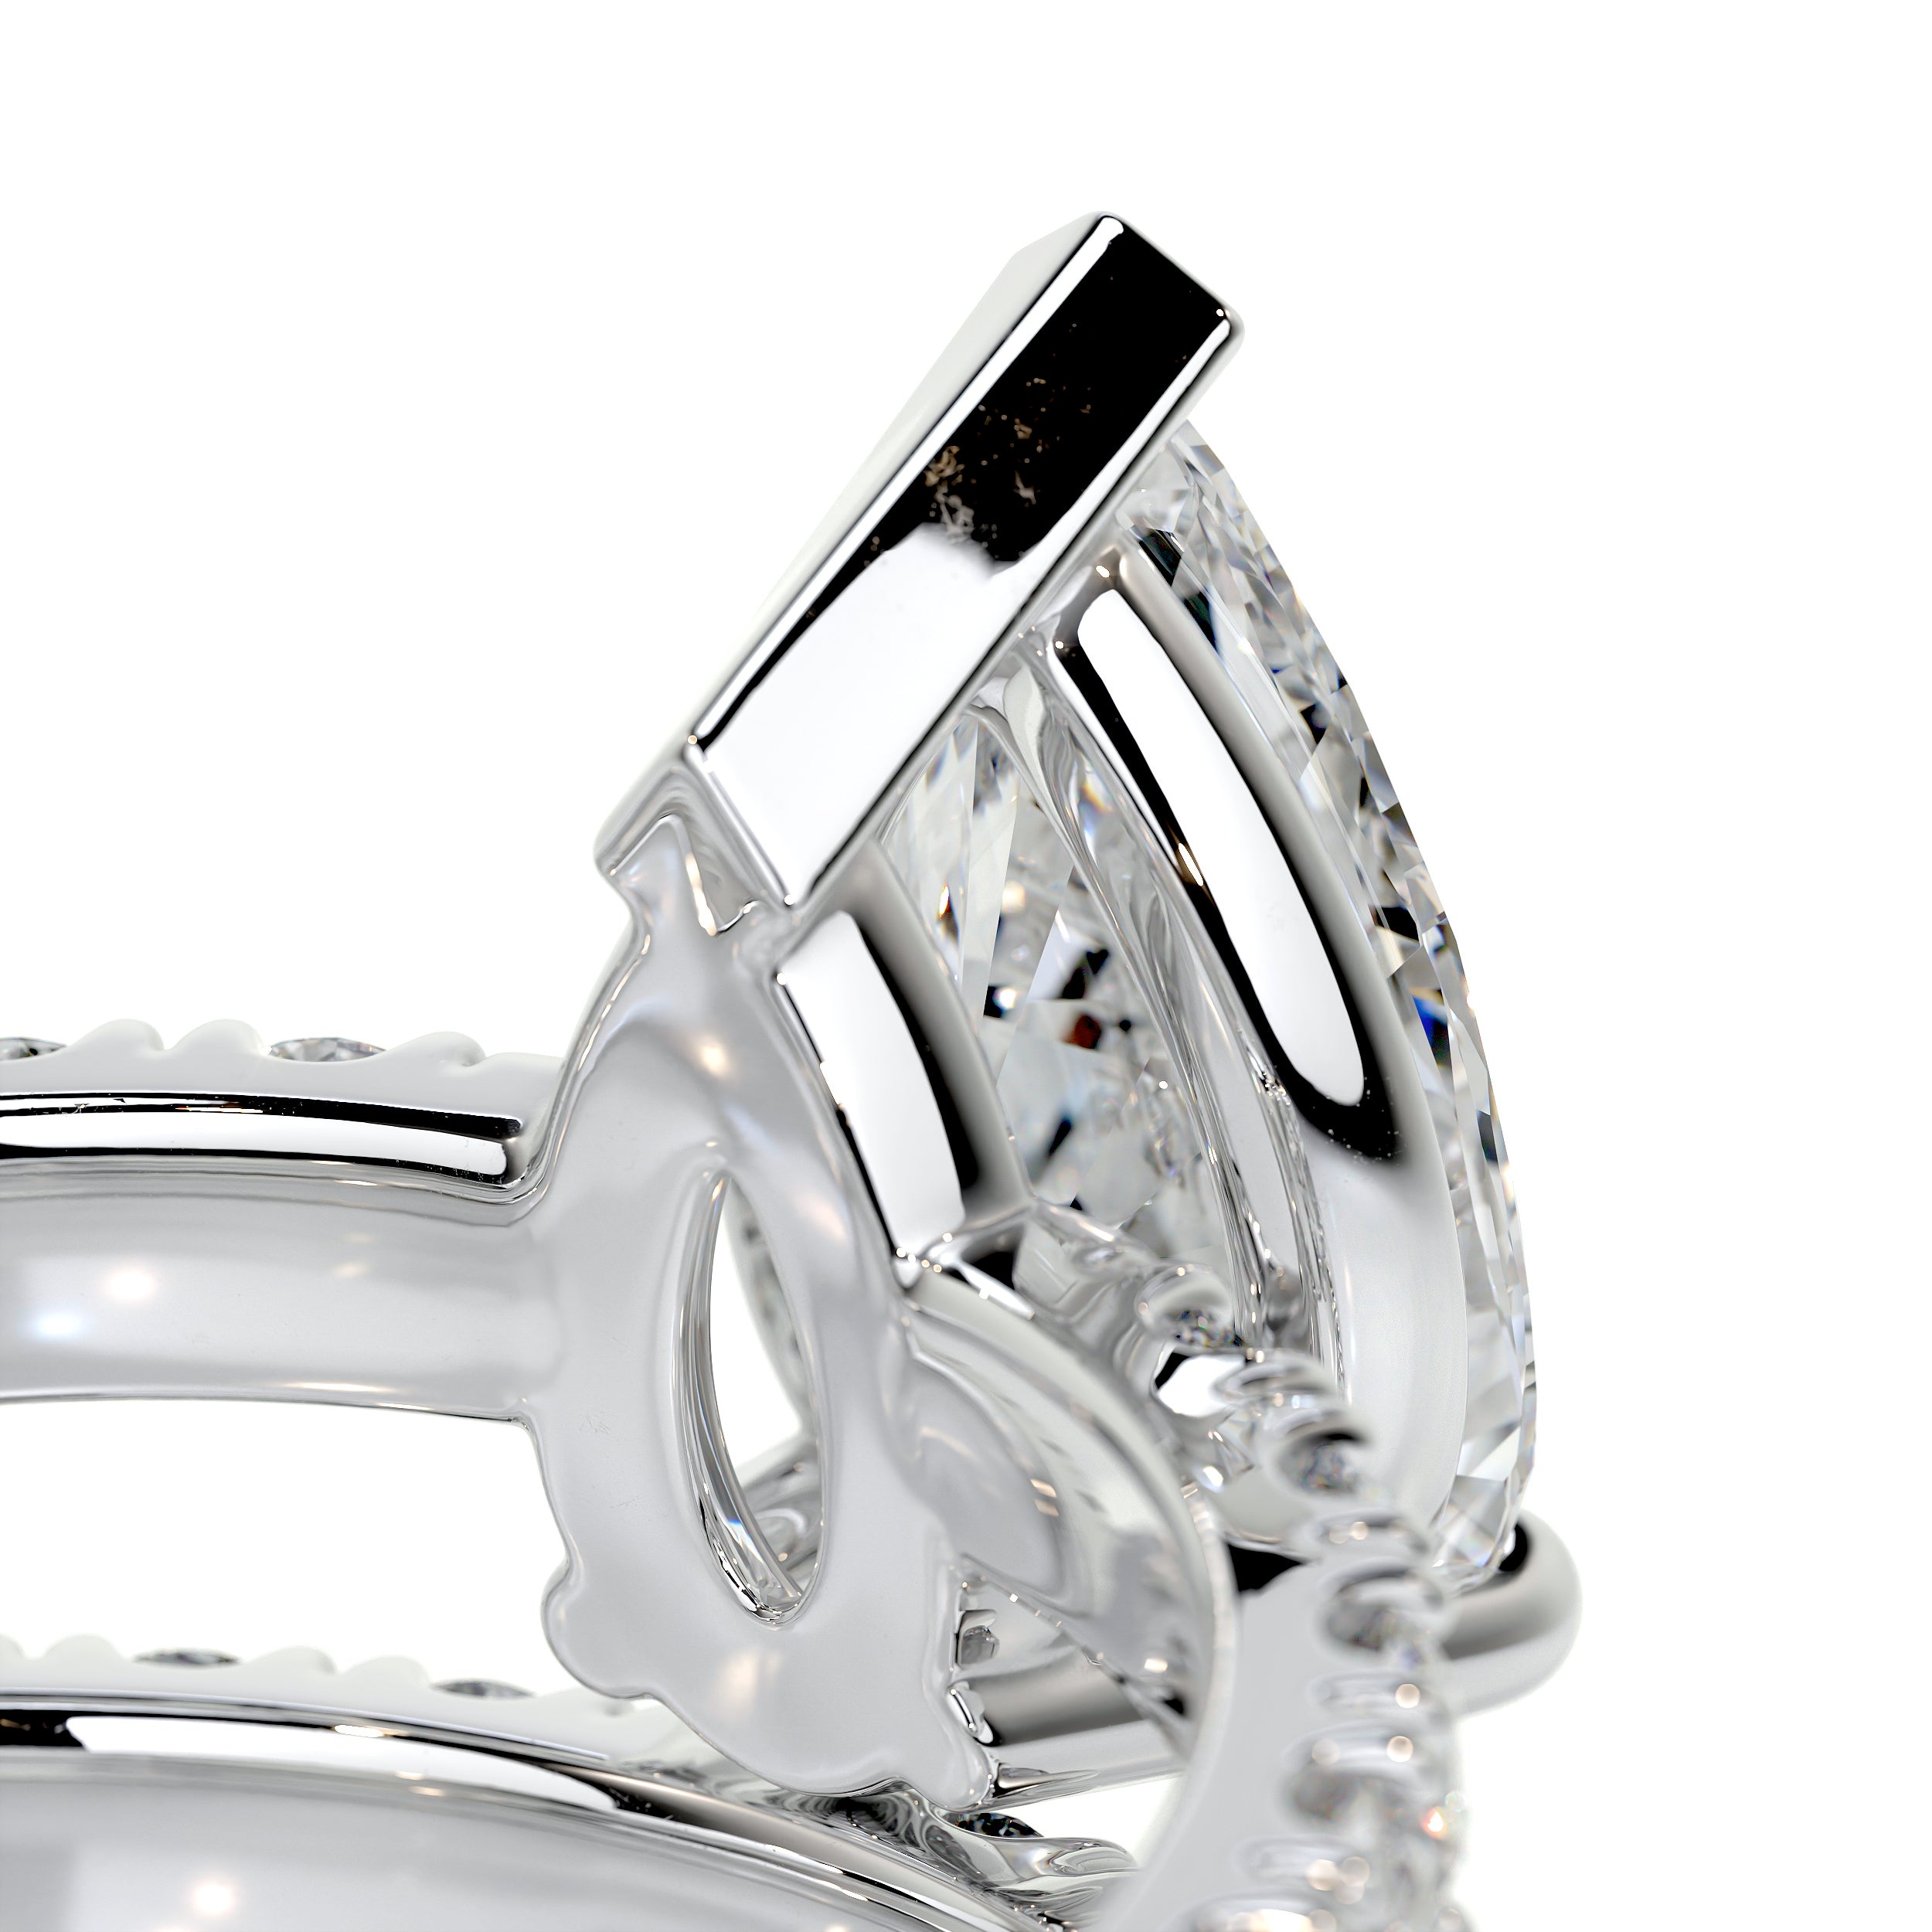 Hailey Diamond Bridal Set   (2.5 Carat) -Platinum